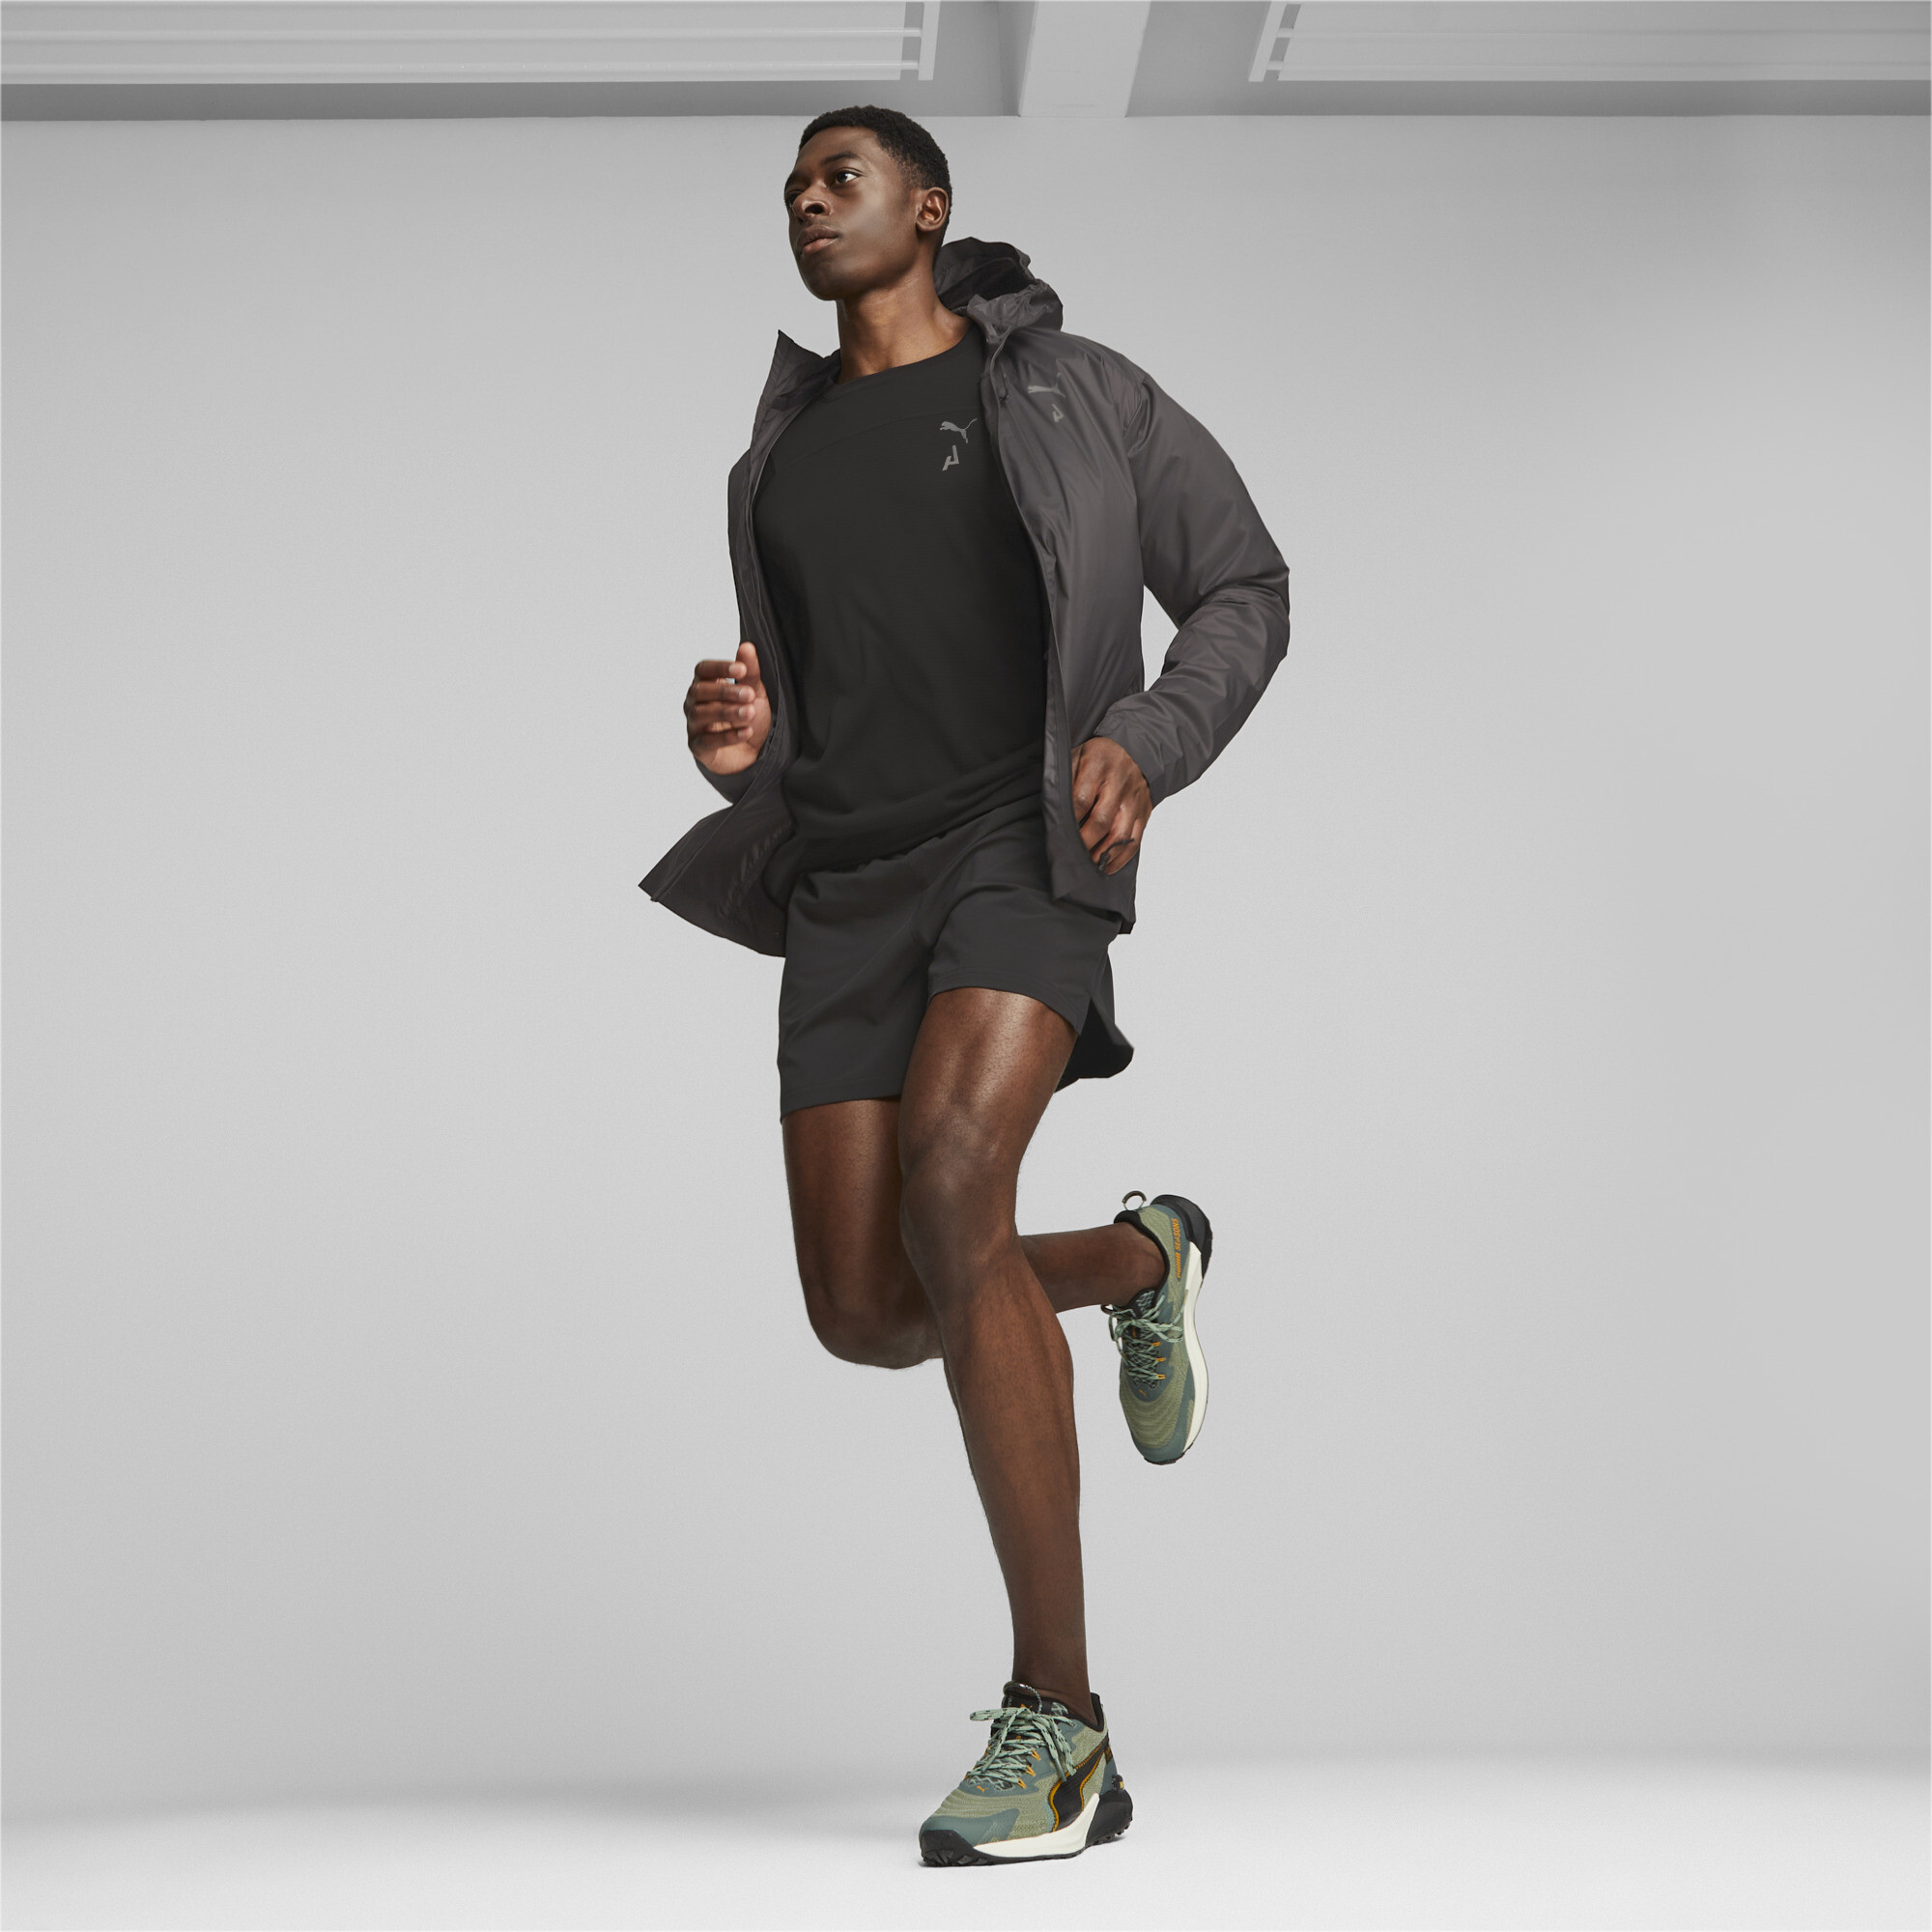 Men's Puma SEASONS's Lightweight Running Jacket, Black, Size S, Clothing